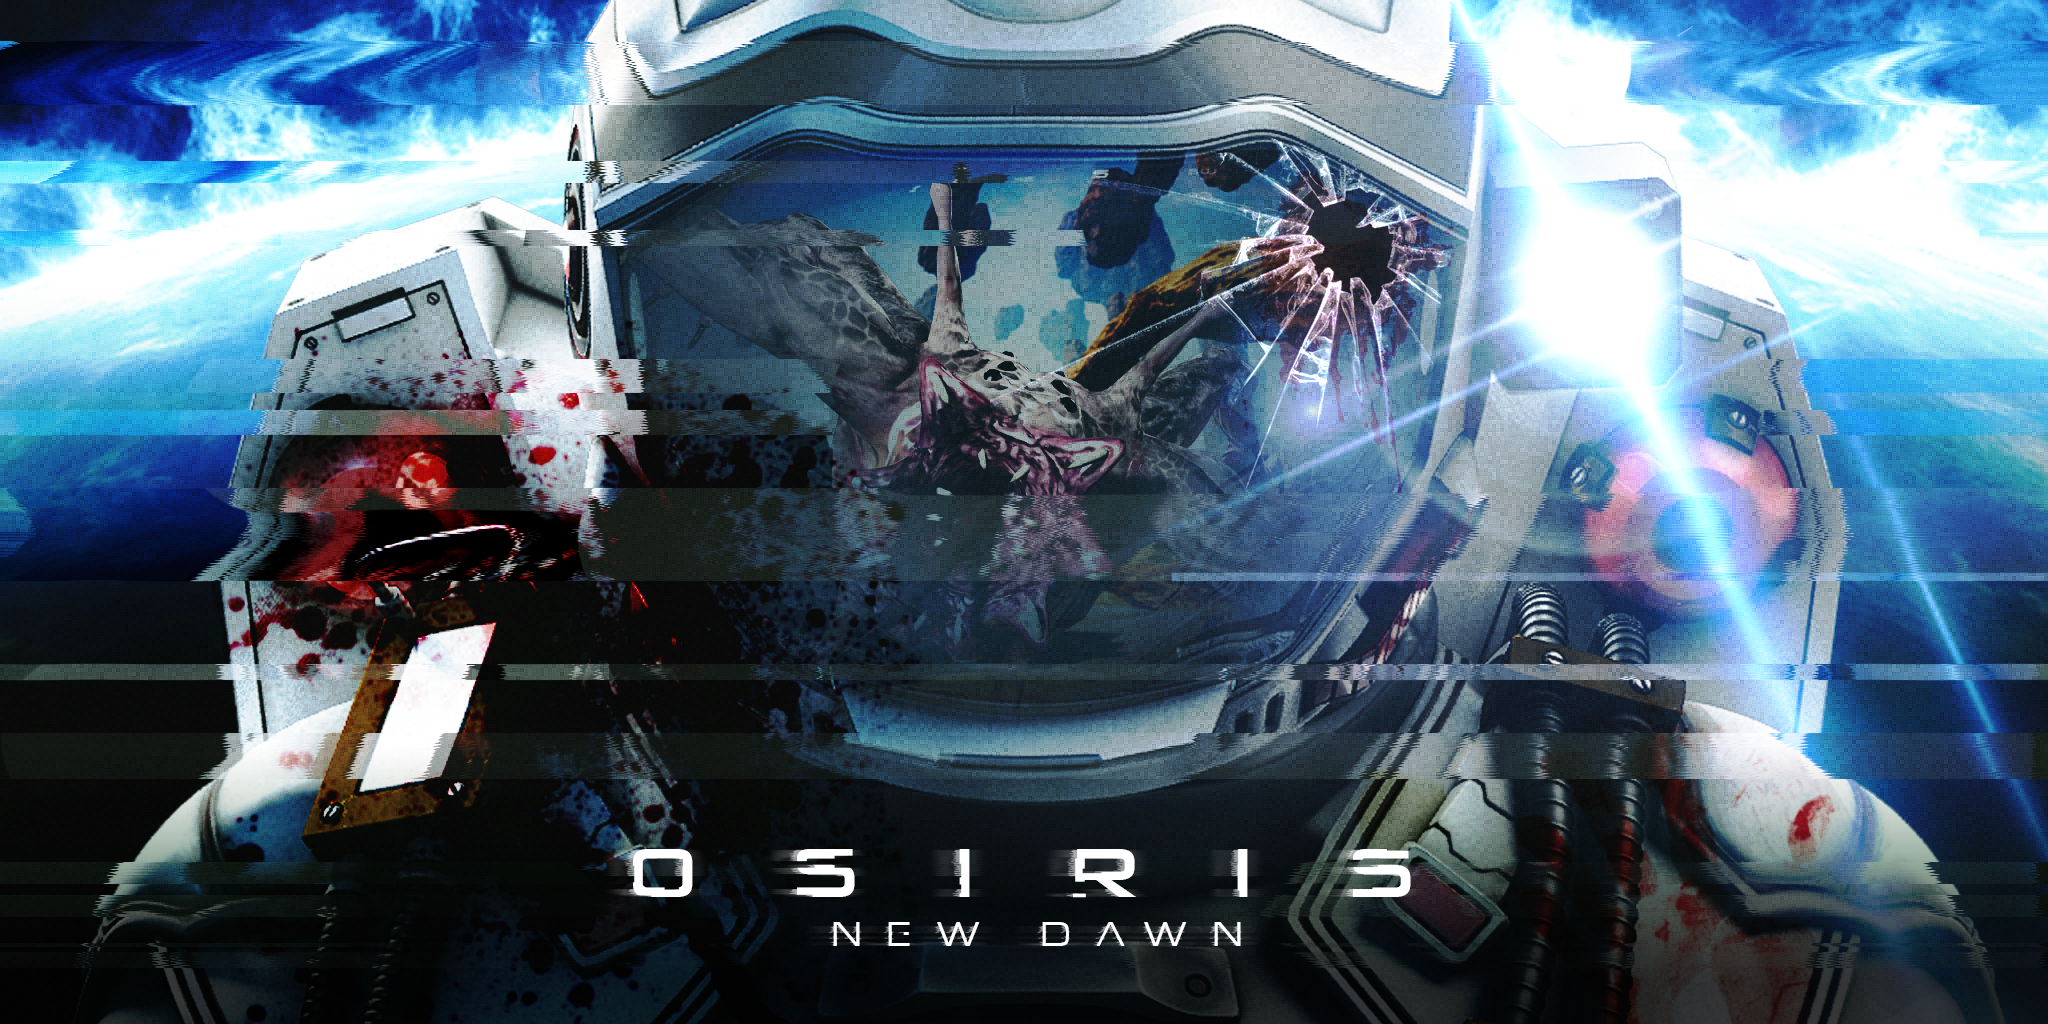 Osiris: New Dawn Picture